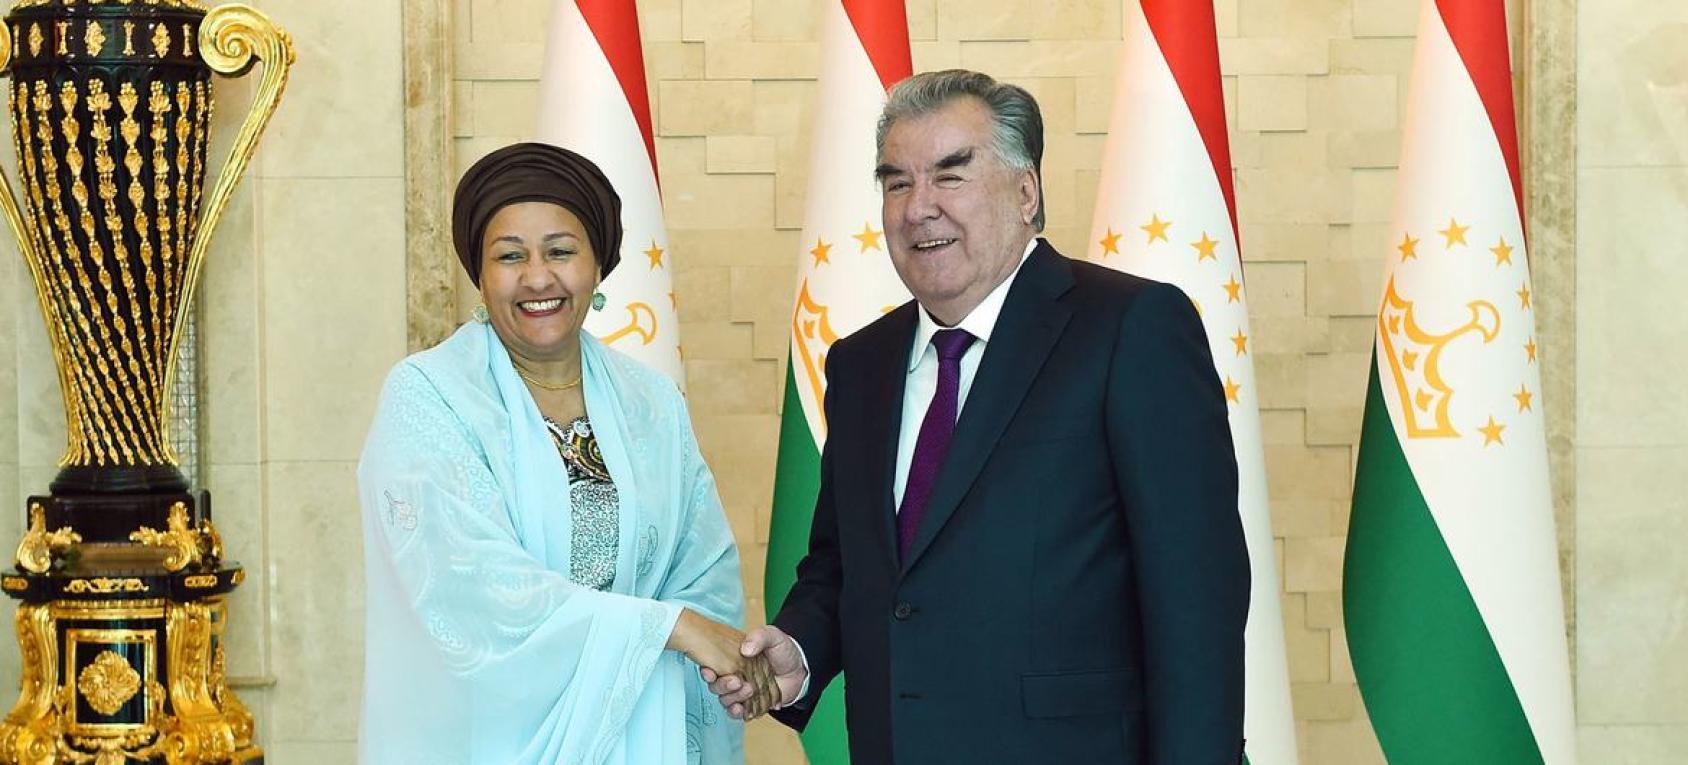 UN Deputy Secretary-General Amina Mohammed and the President of Tajikistan, Imomali Rahmon.